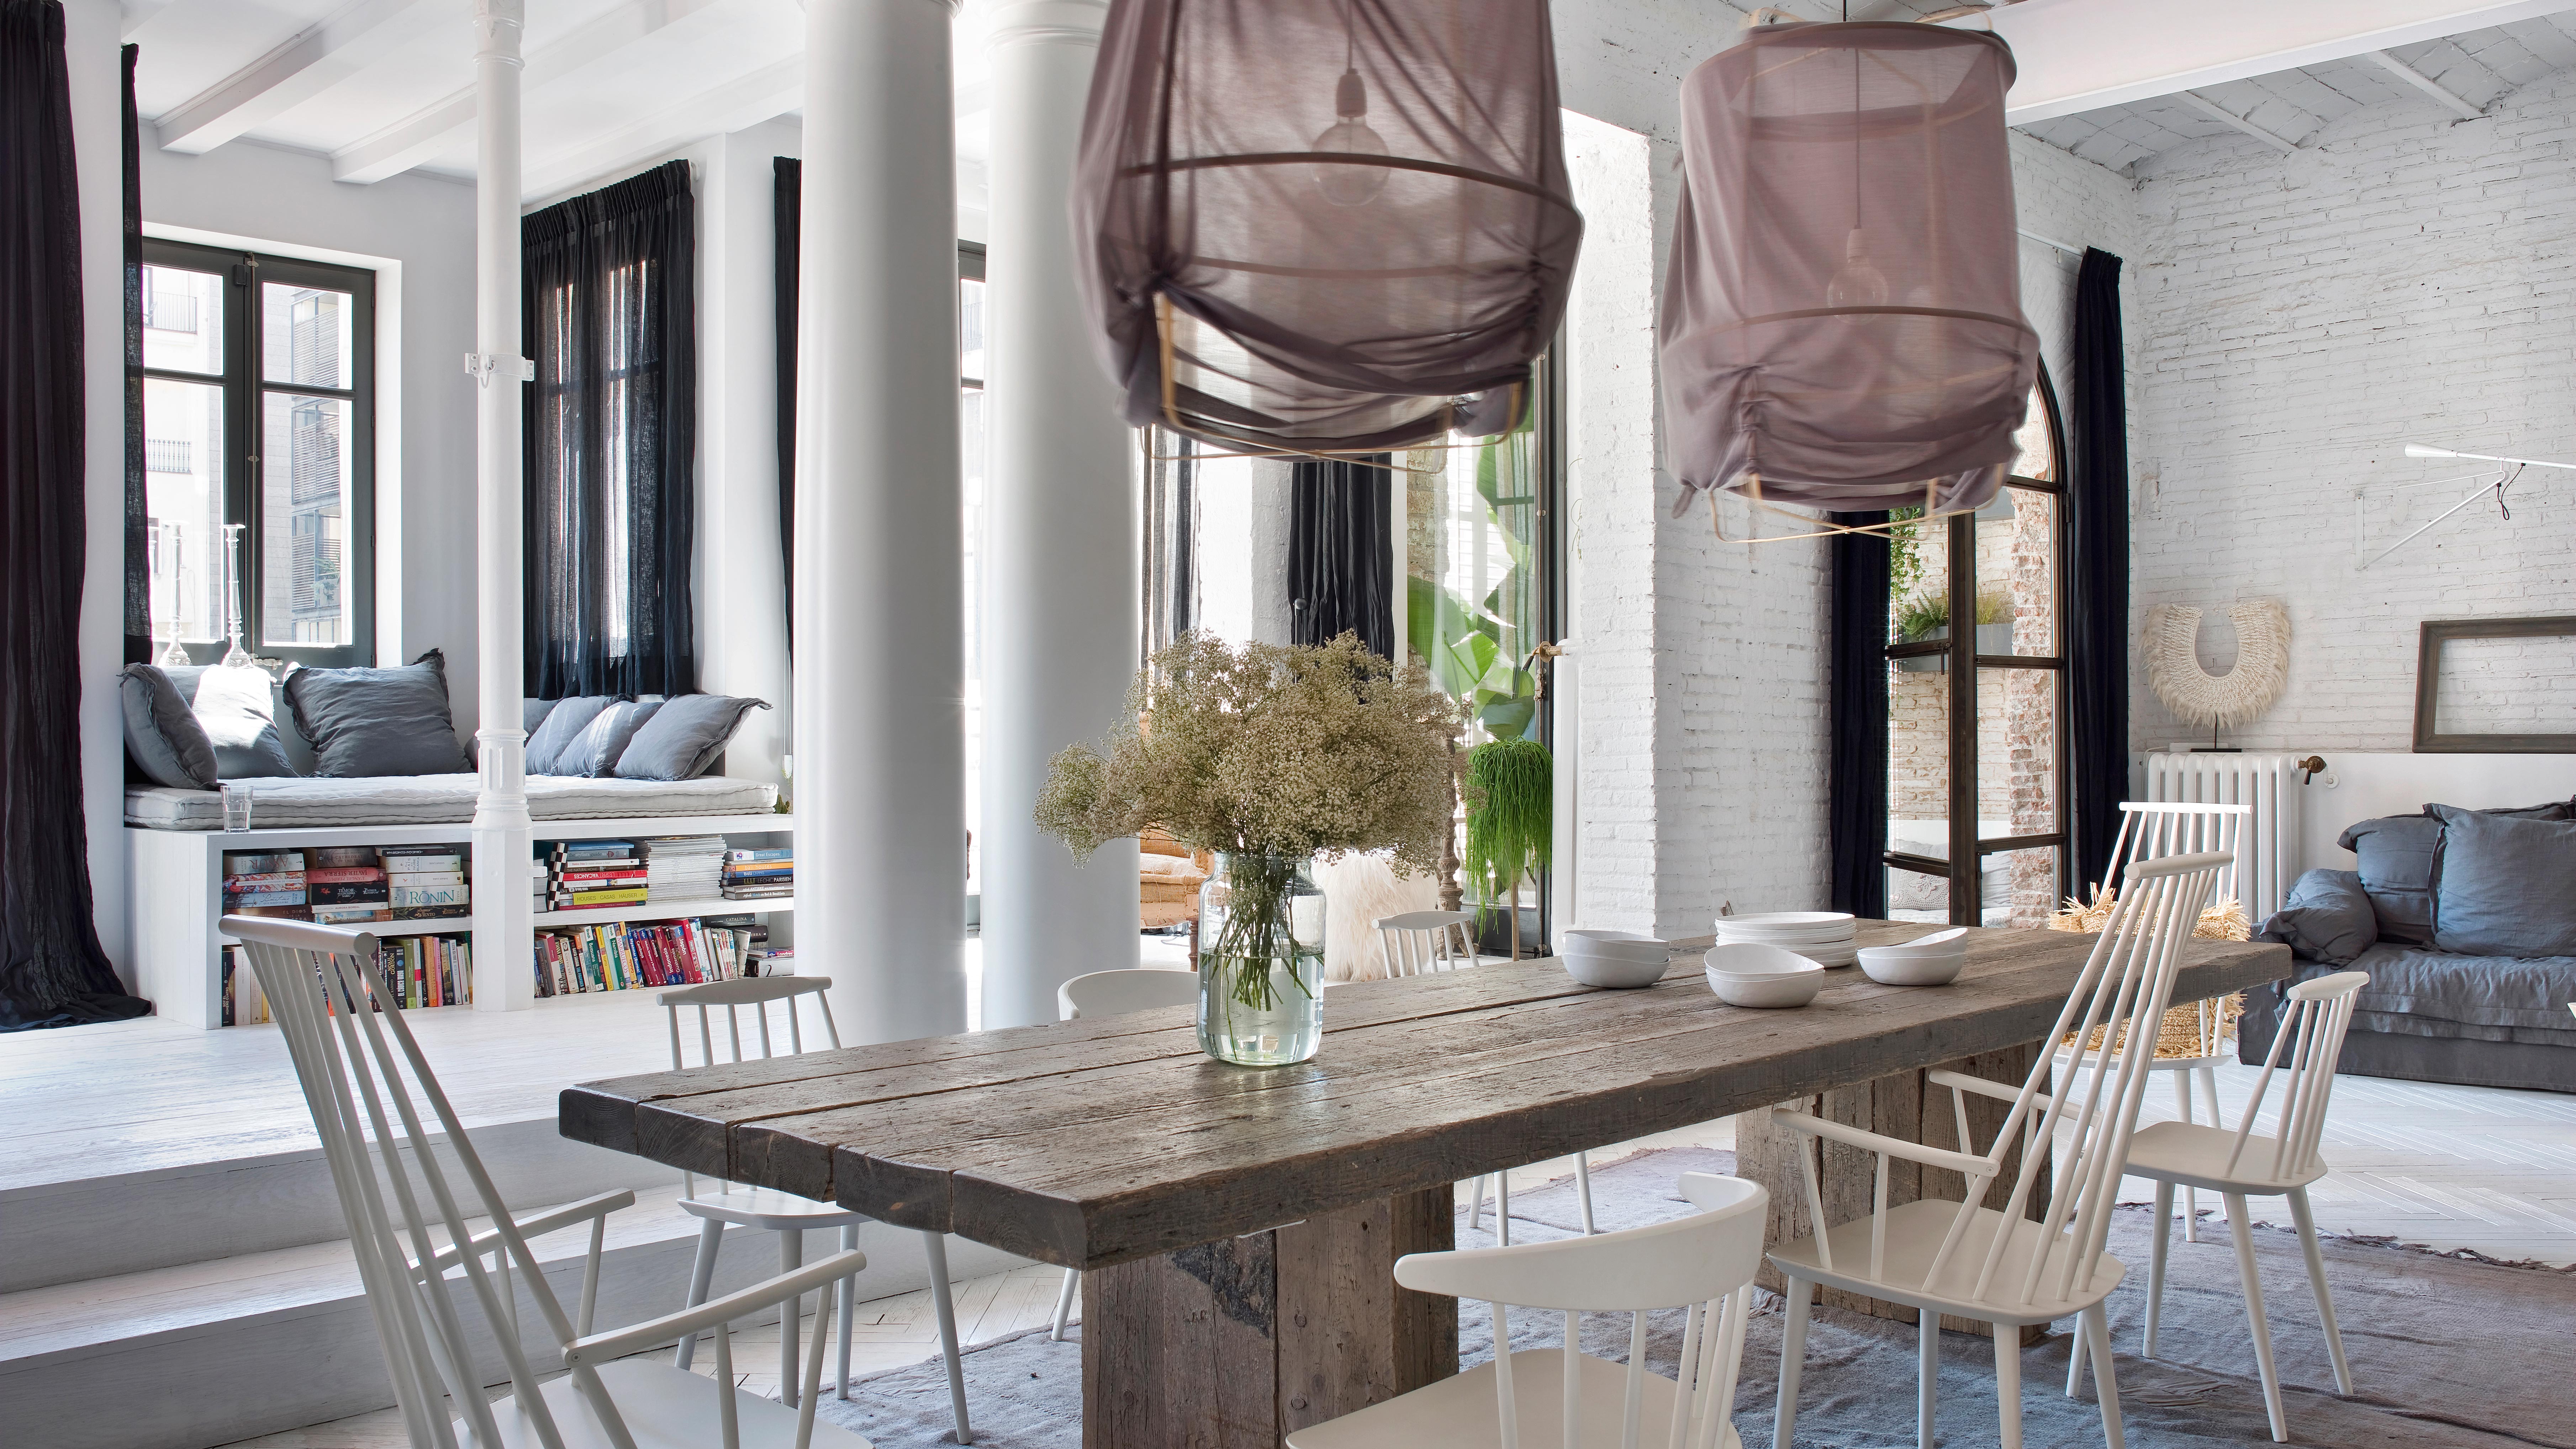 15 Dining Room Lighting Ideas To Create, Dining Room Lights Above Table Ikea